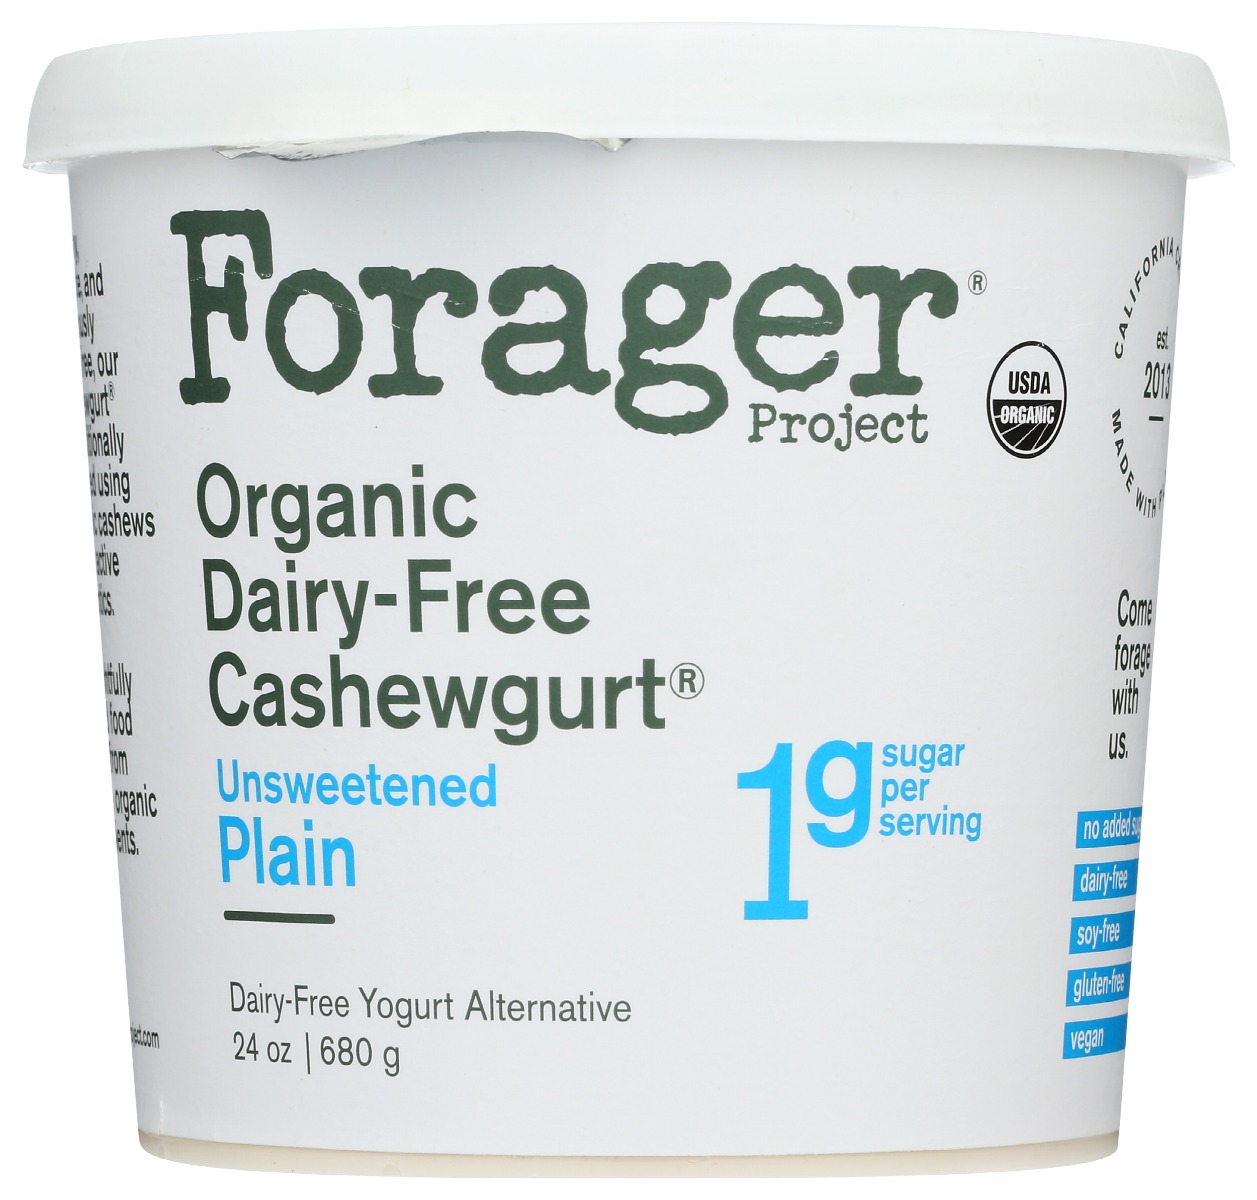 FORAGER: Unsweetened Plain Organic Cashewgurt, 24 oz - 0814558020331